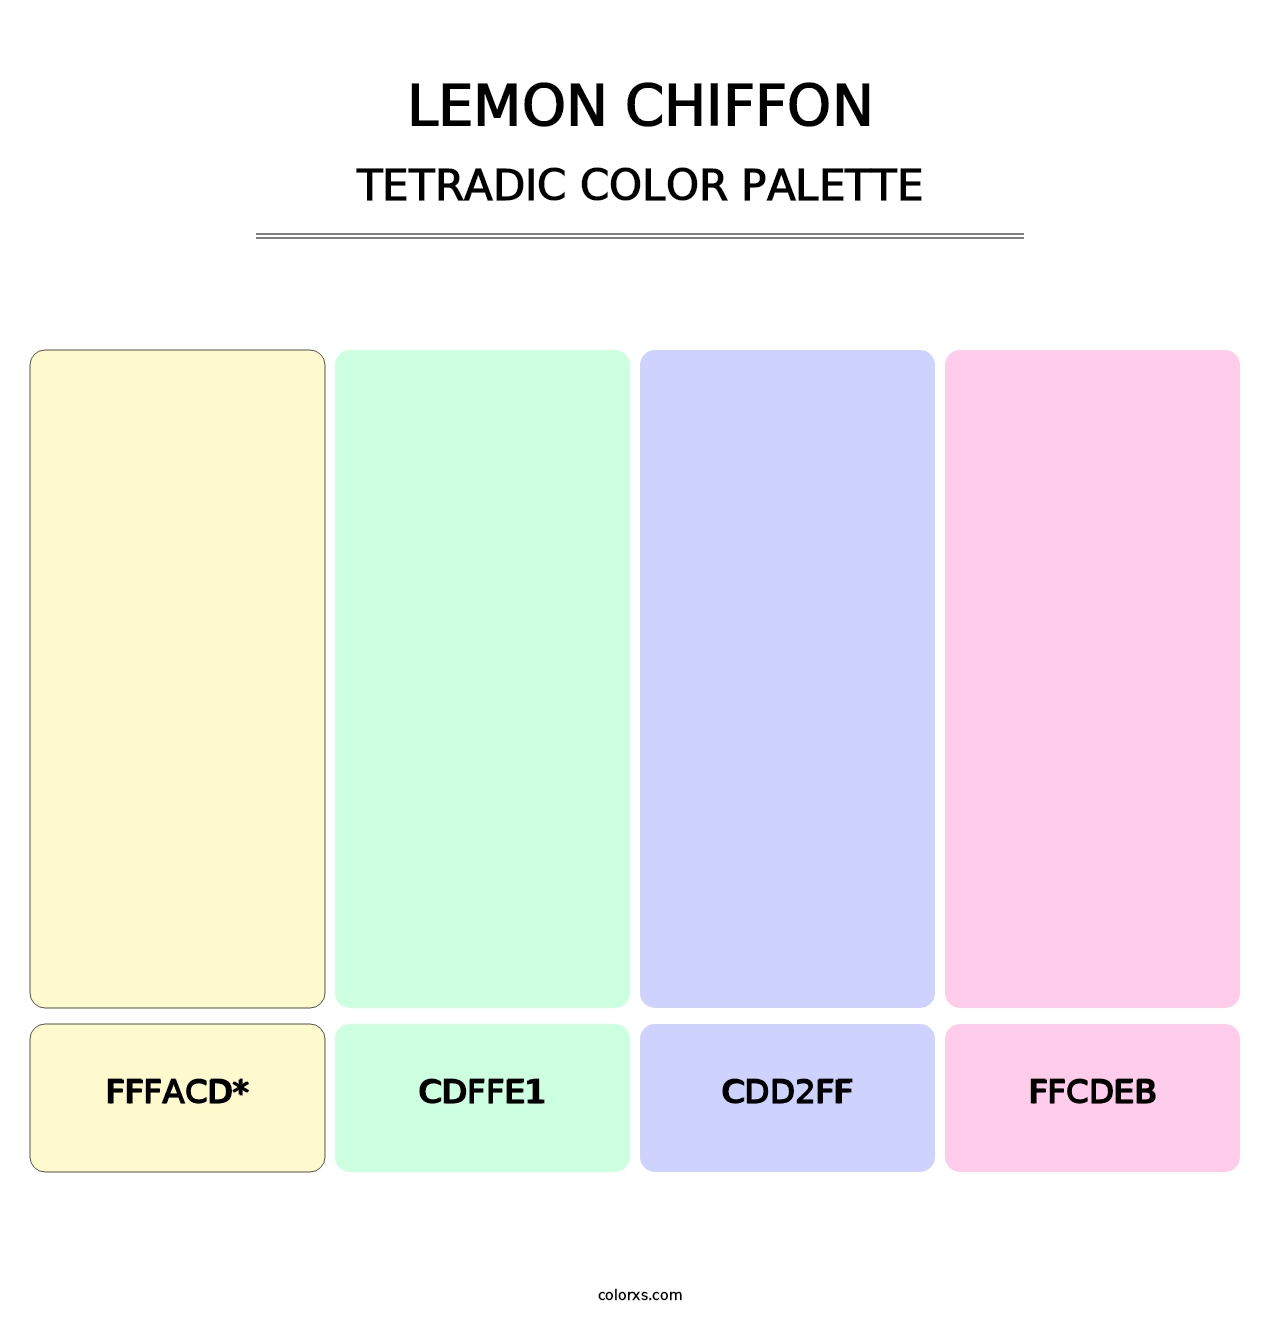 Lemon Chiffon - Tetradic Color Palette